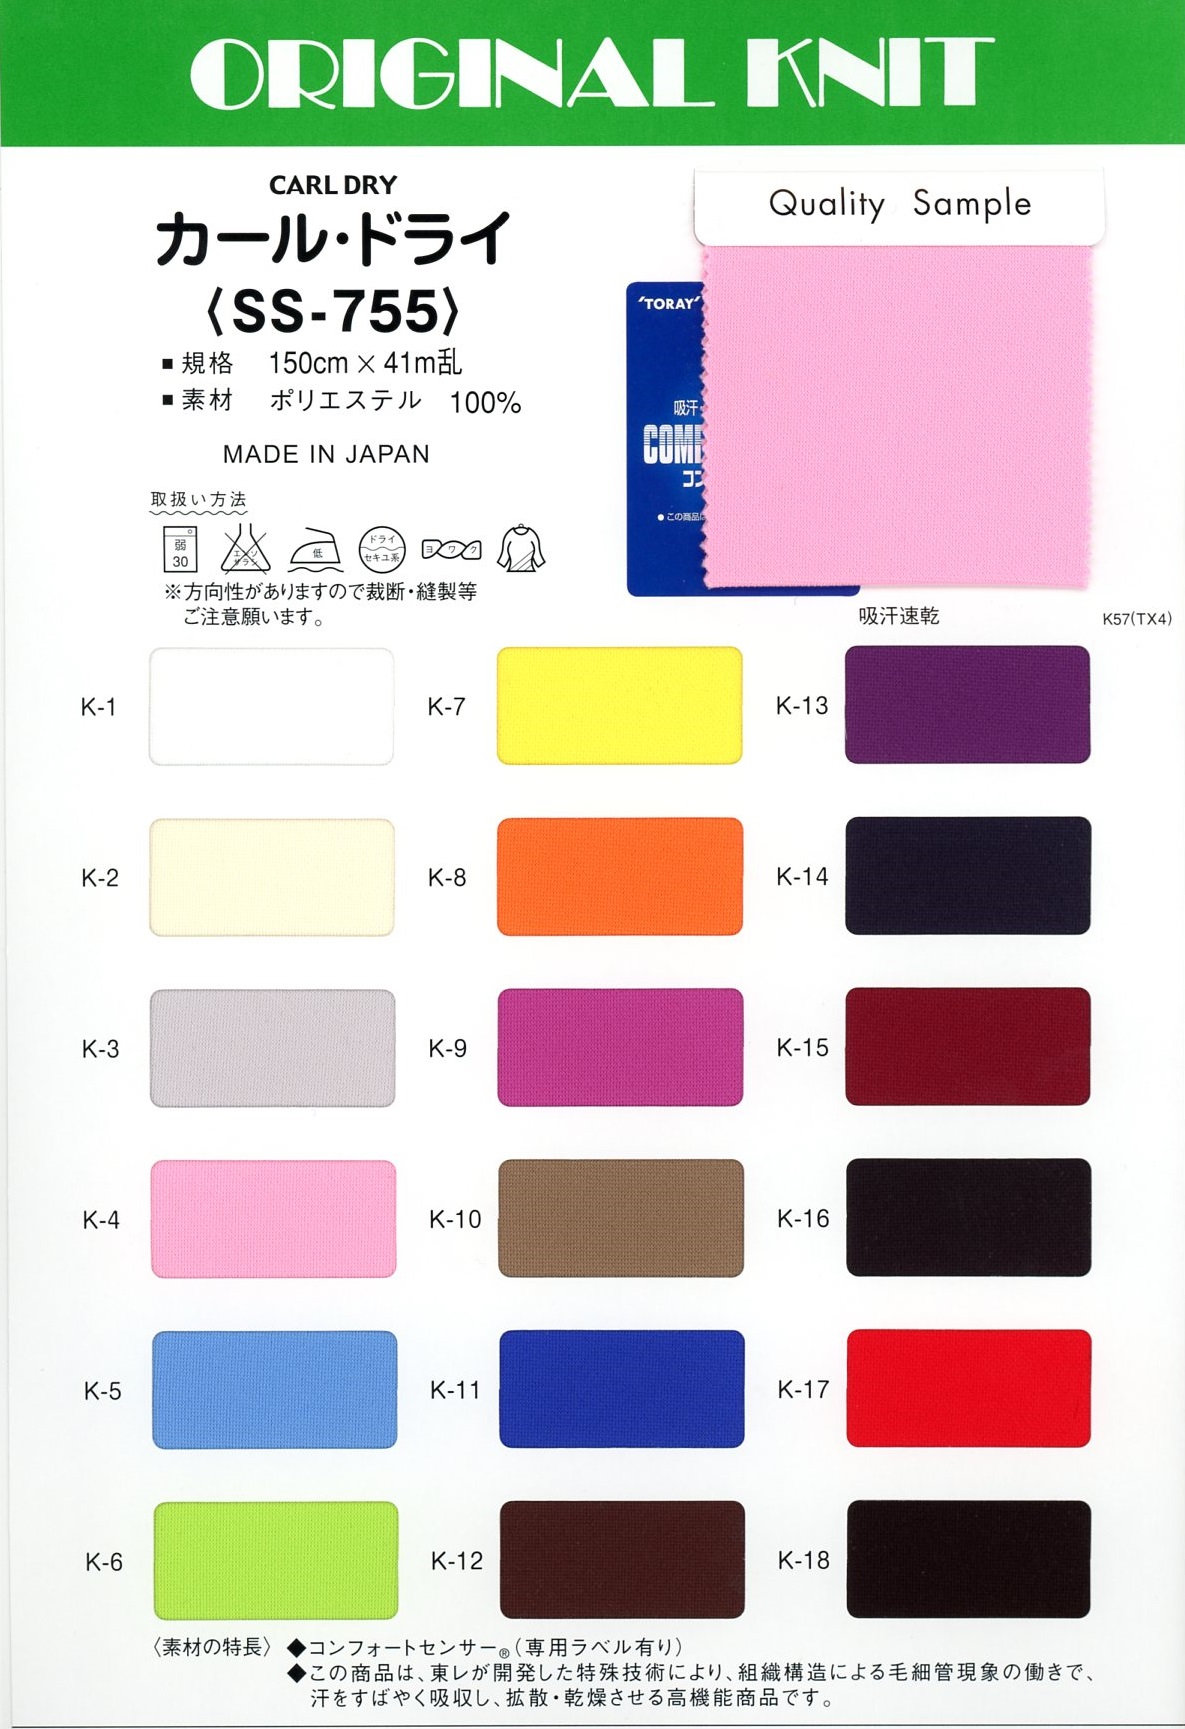 SS755 Curl Dry[Textile / Fabric] Masuda